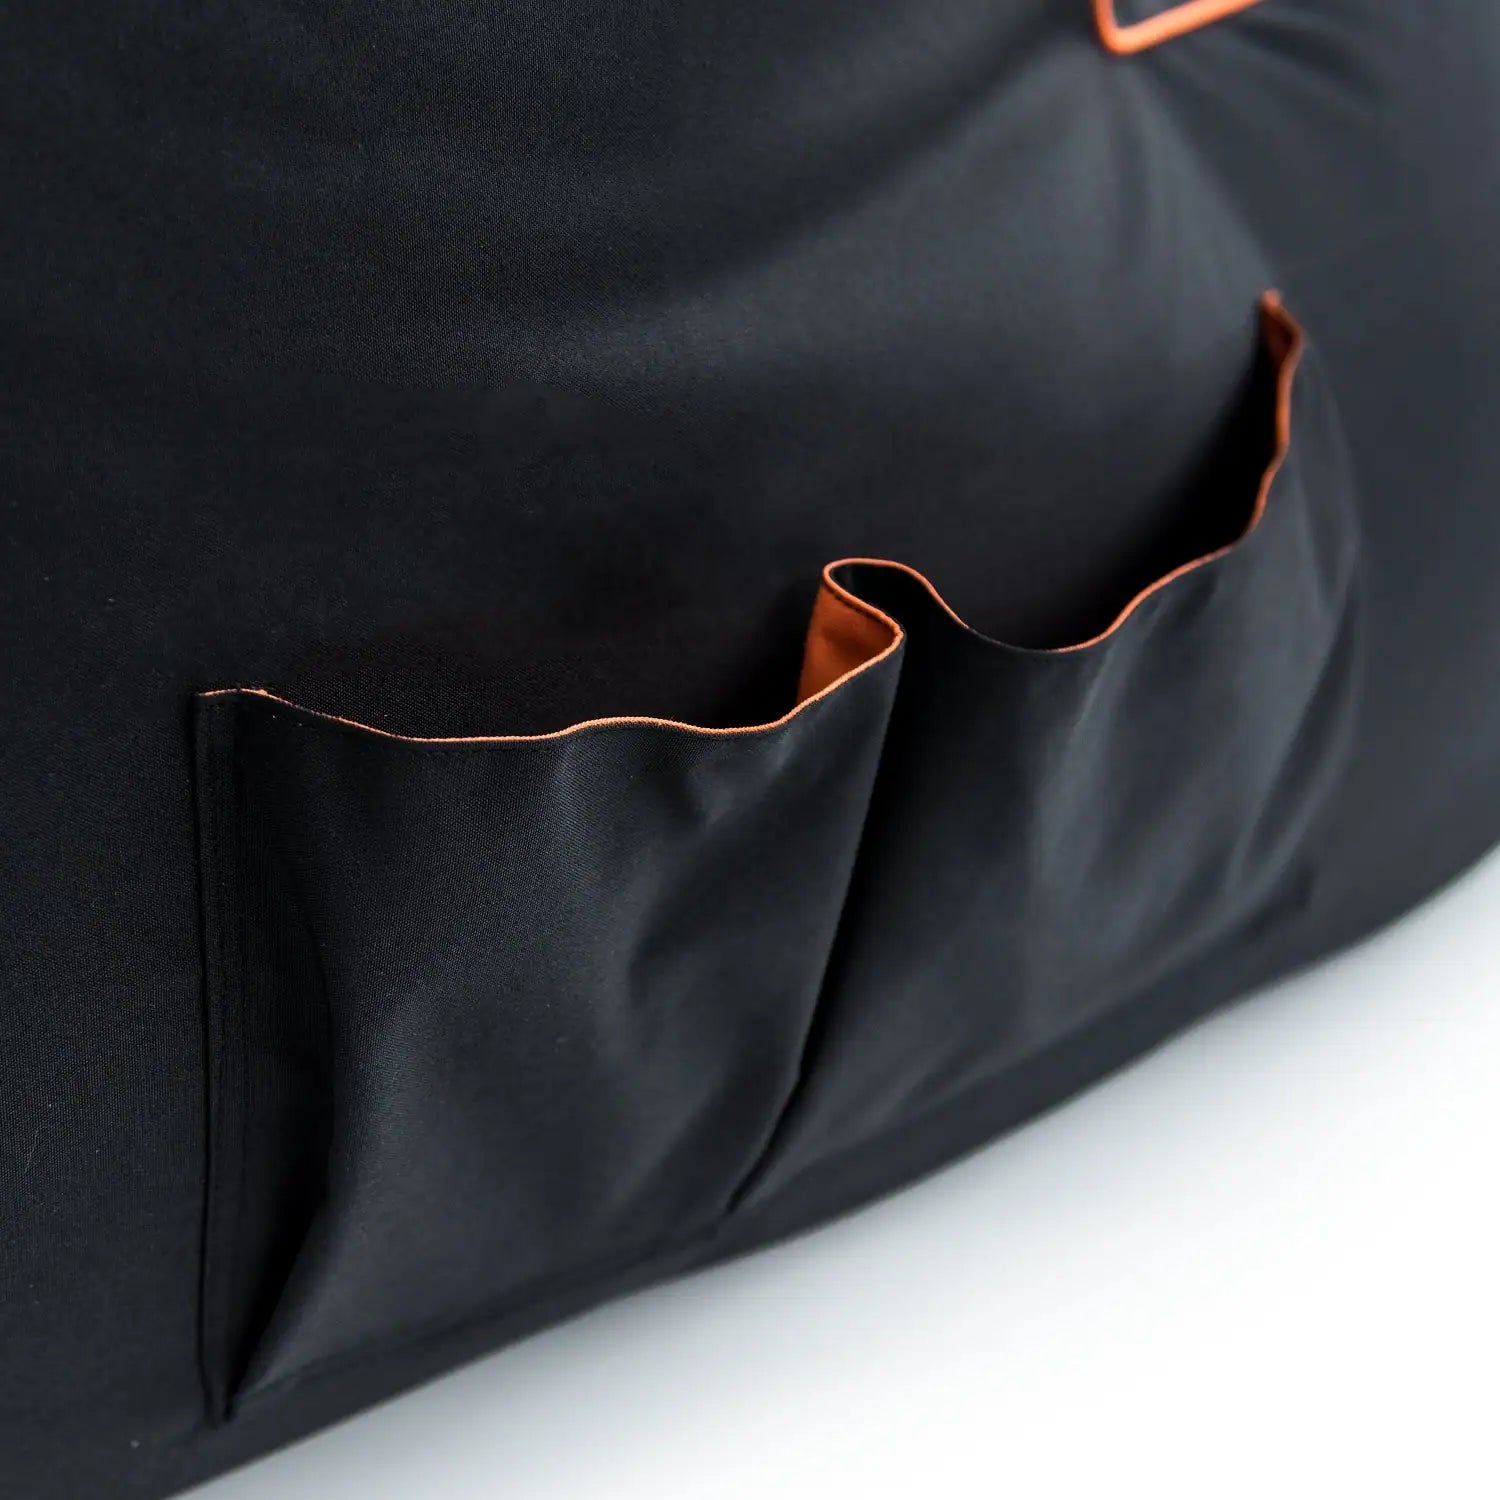 A close-up of a black pocket on a bag.